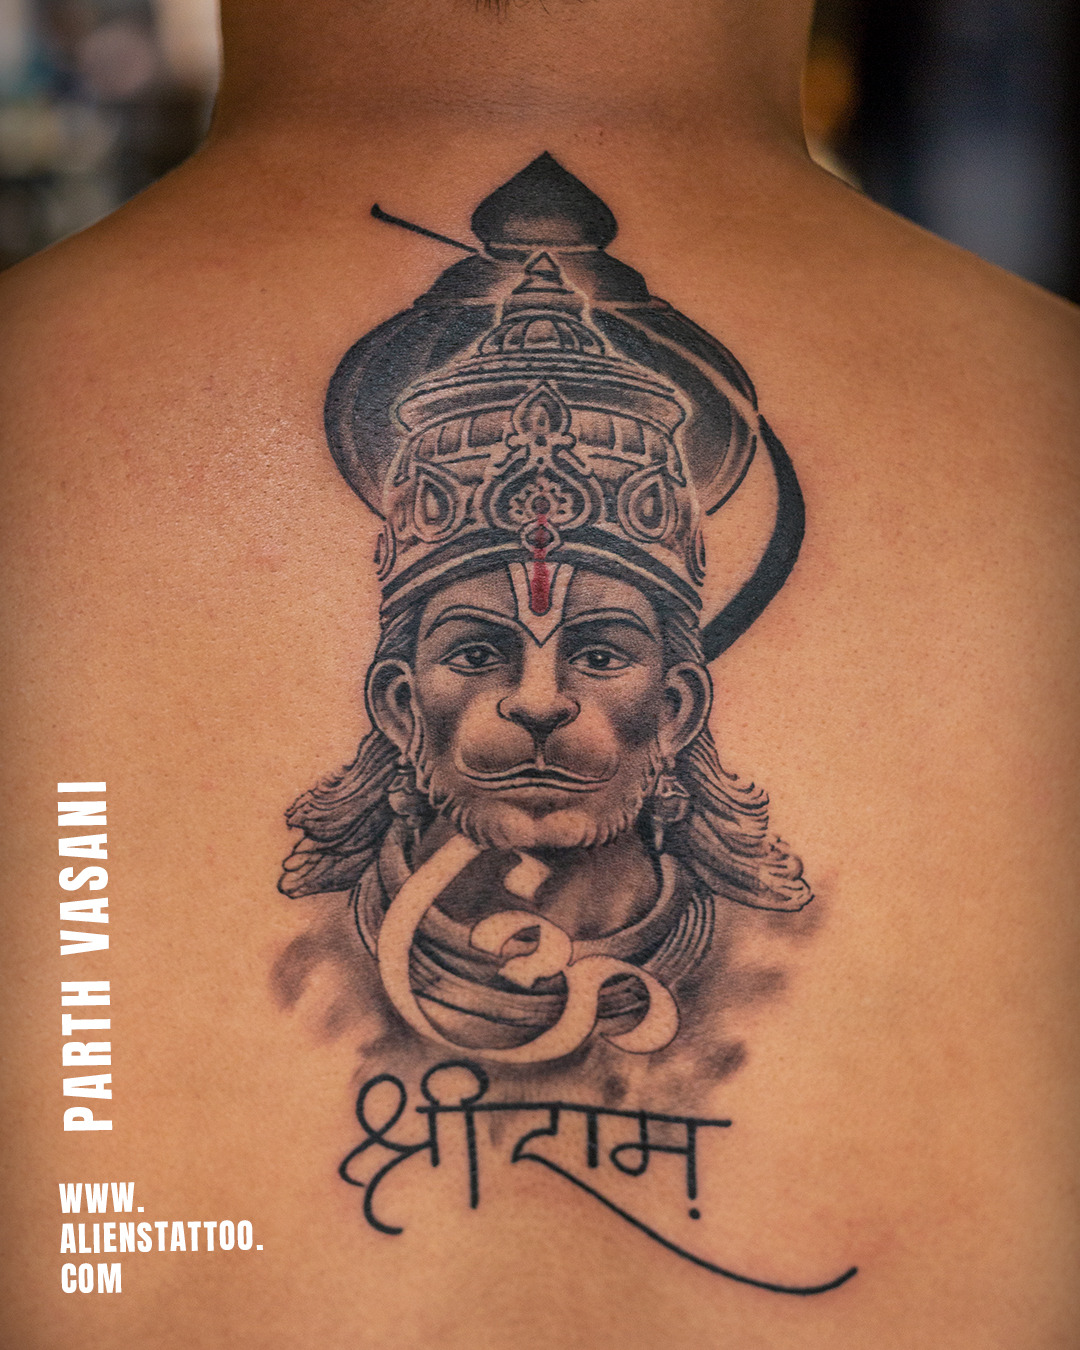 A Kirituhi by Parth at Zealand Tattoo - Queenstown, New Zealand : r/tattoos